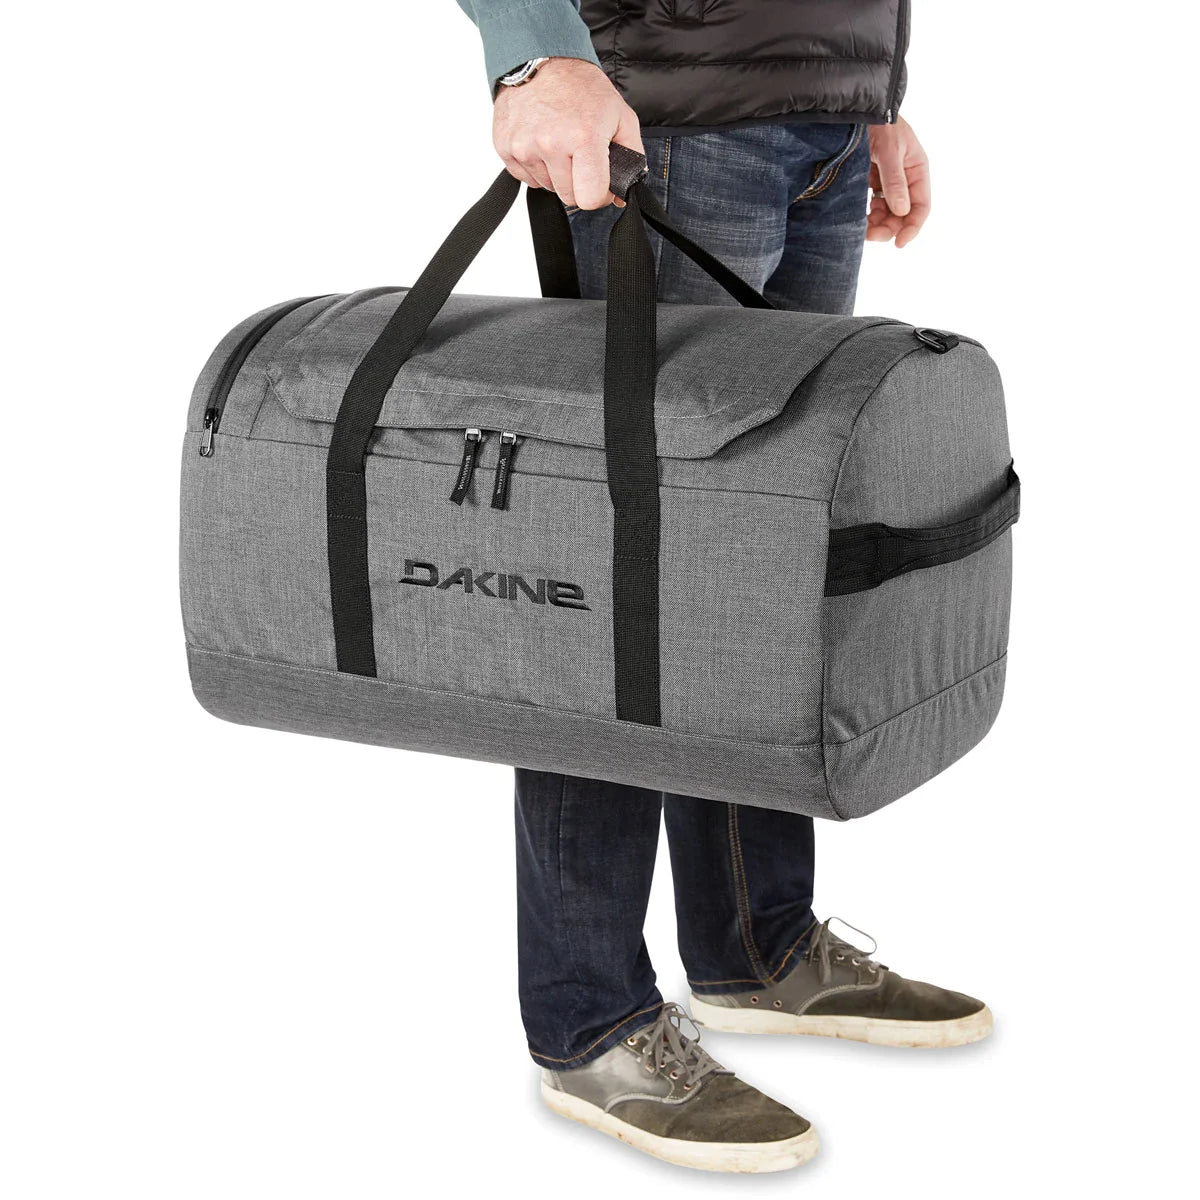 Dakine Packs &amp; Bags Sac de sport EQ Duffle 70L 61 cm - carbone